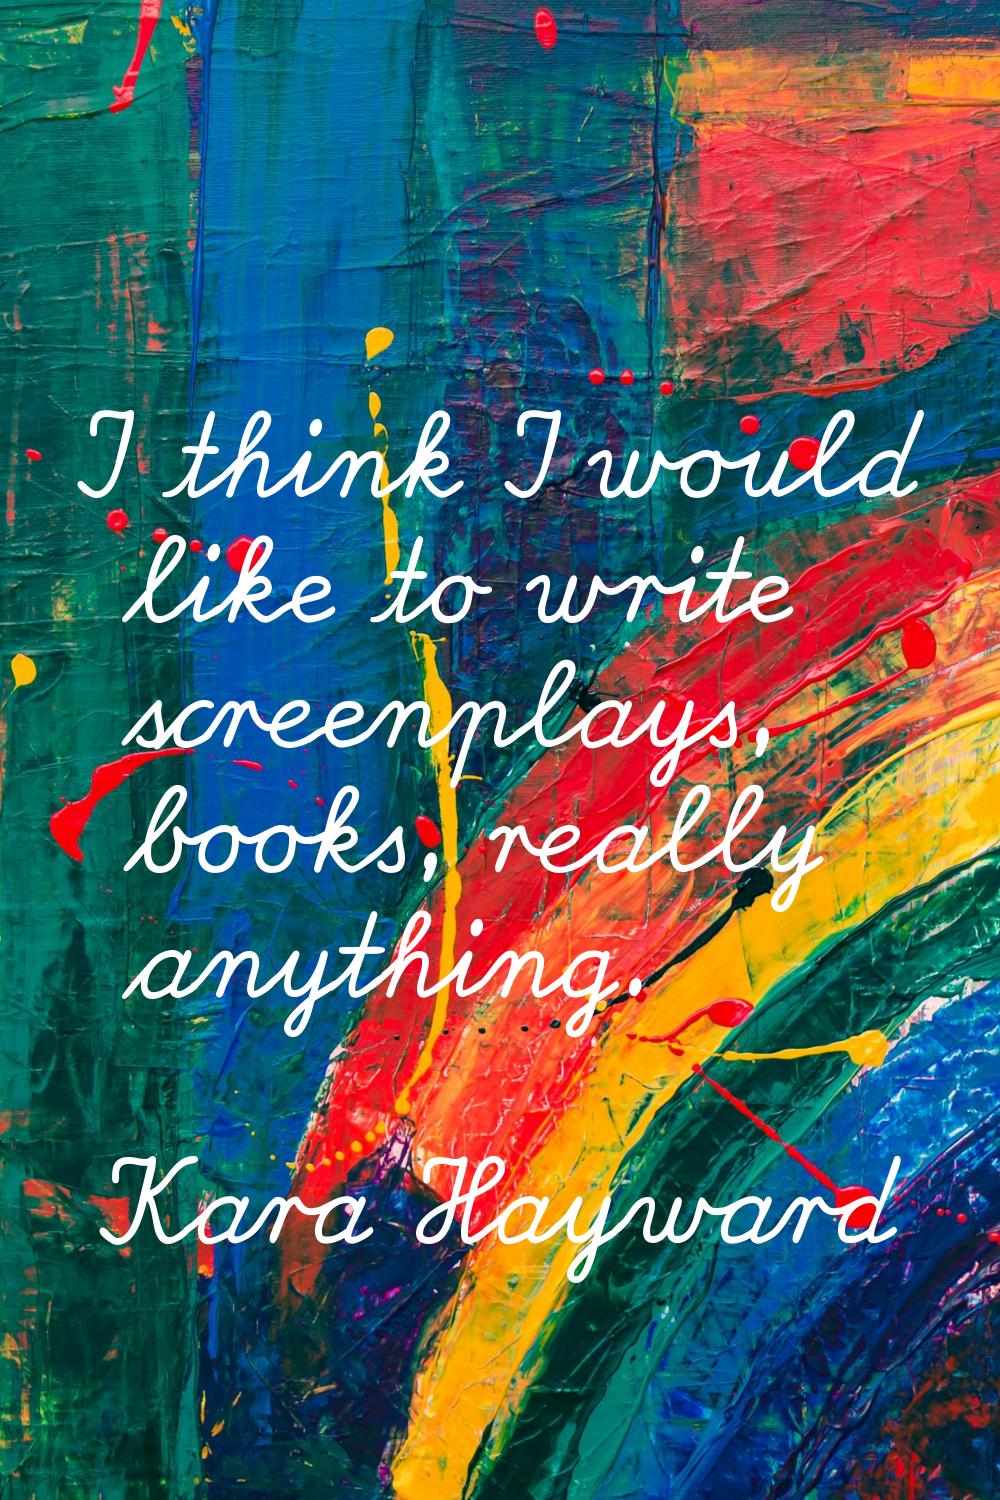 I think I would like to write screenplays, books, really anything.